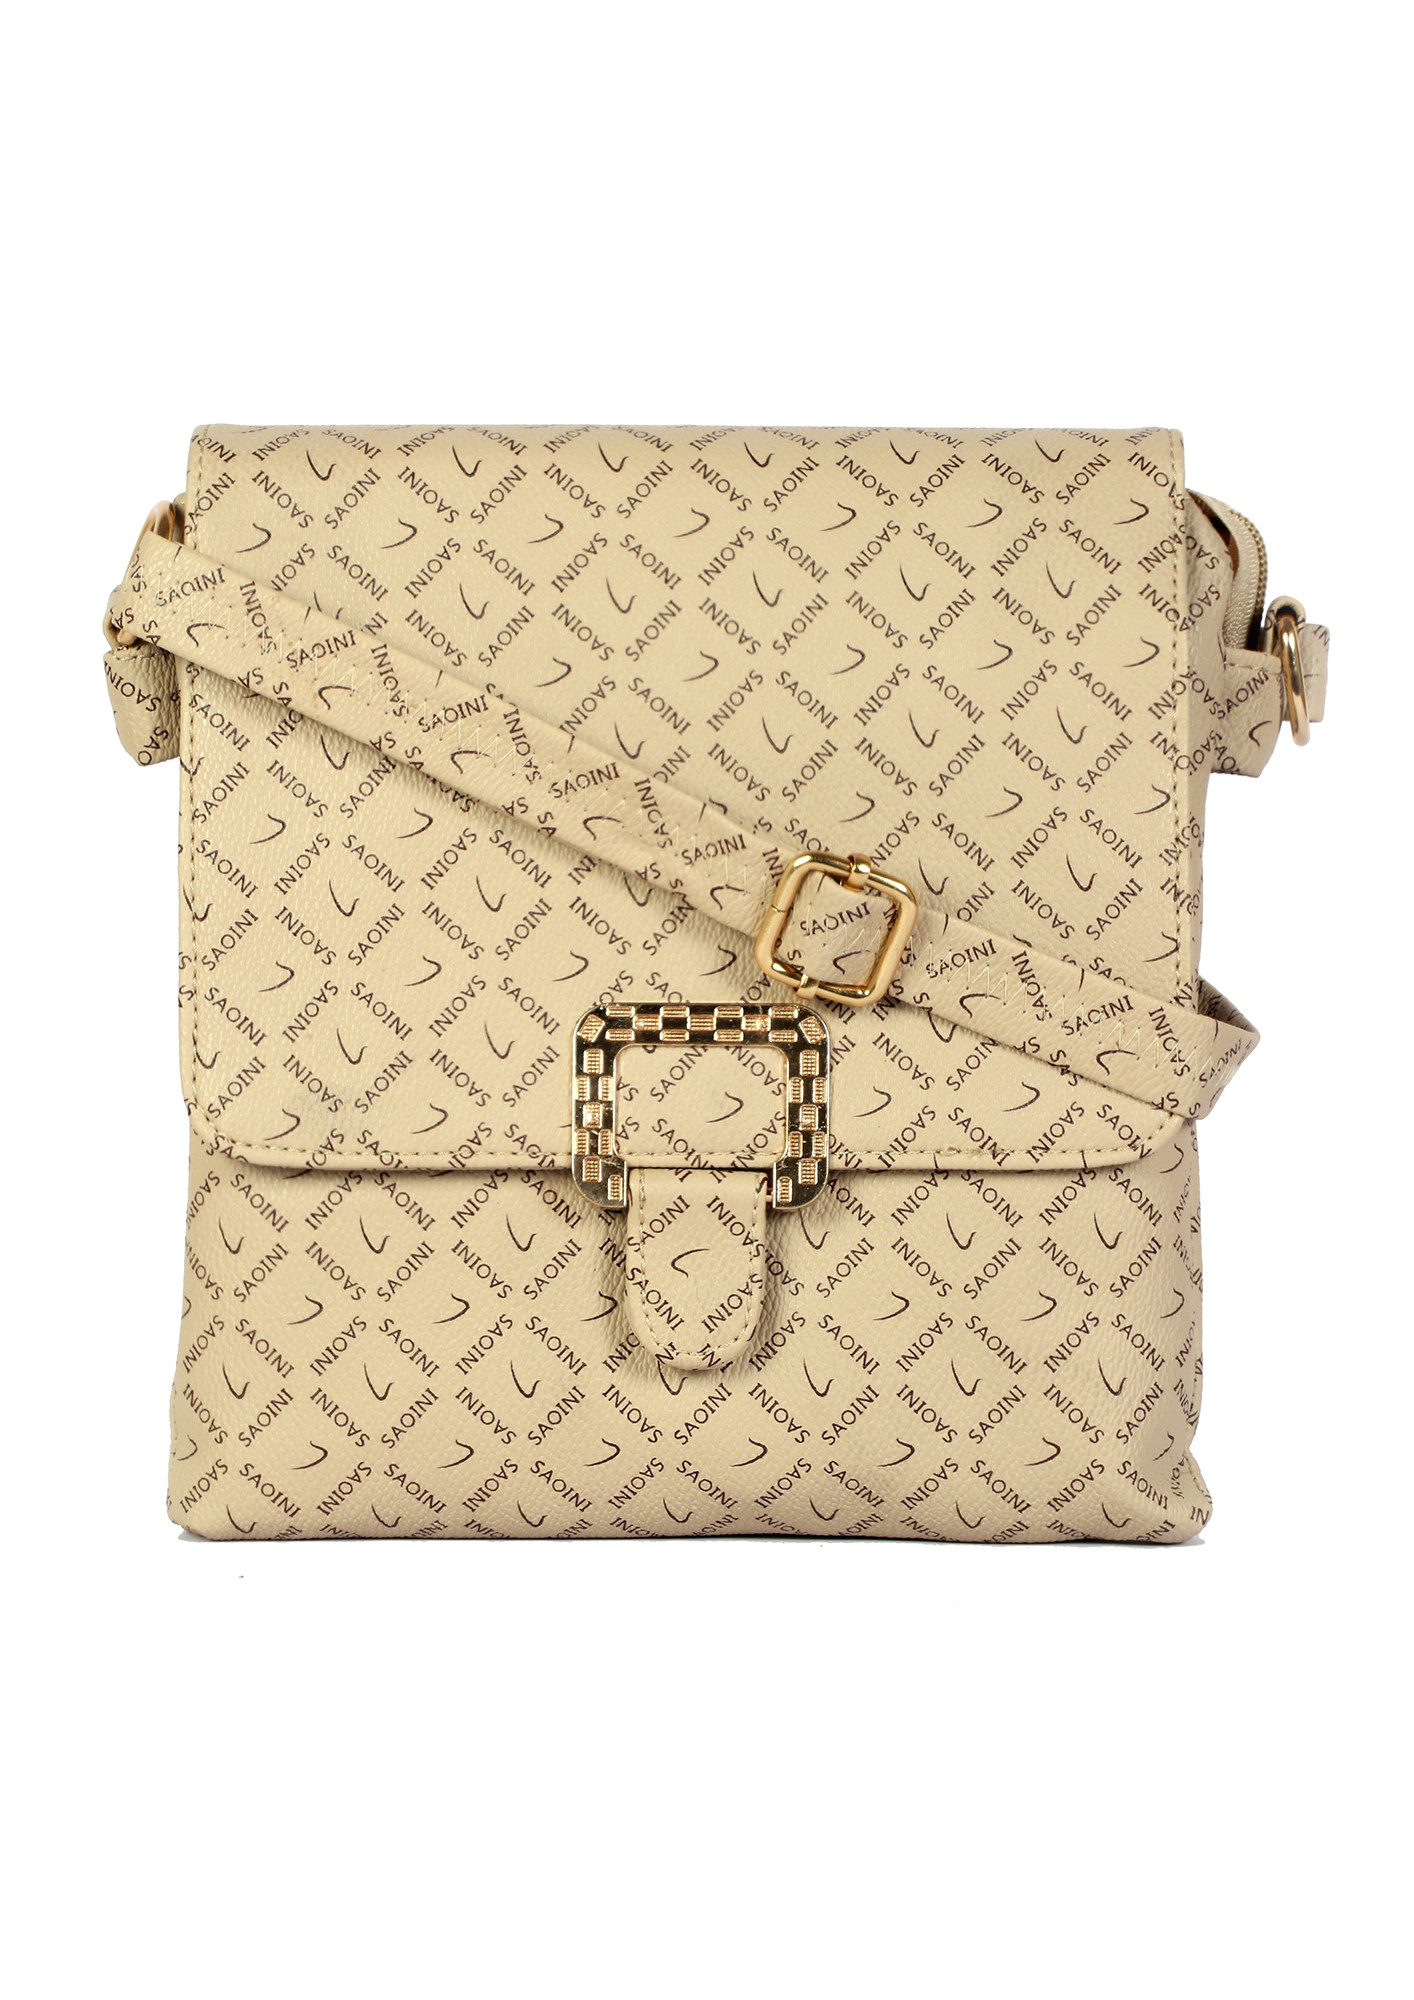 Buy Louis Vuitton Handbag Vintage Online In India -  India